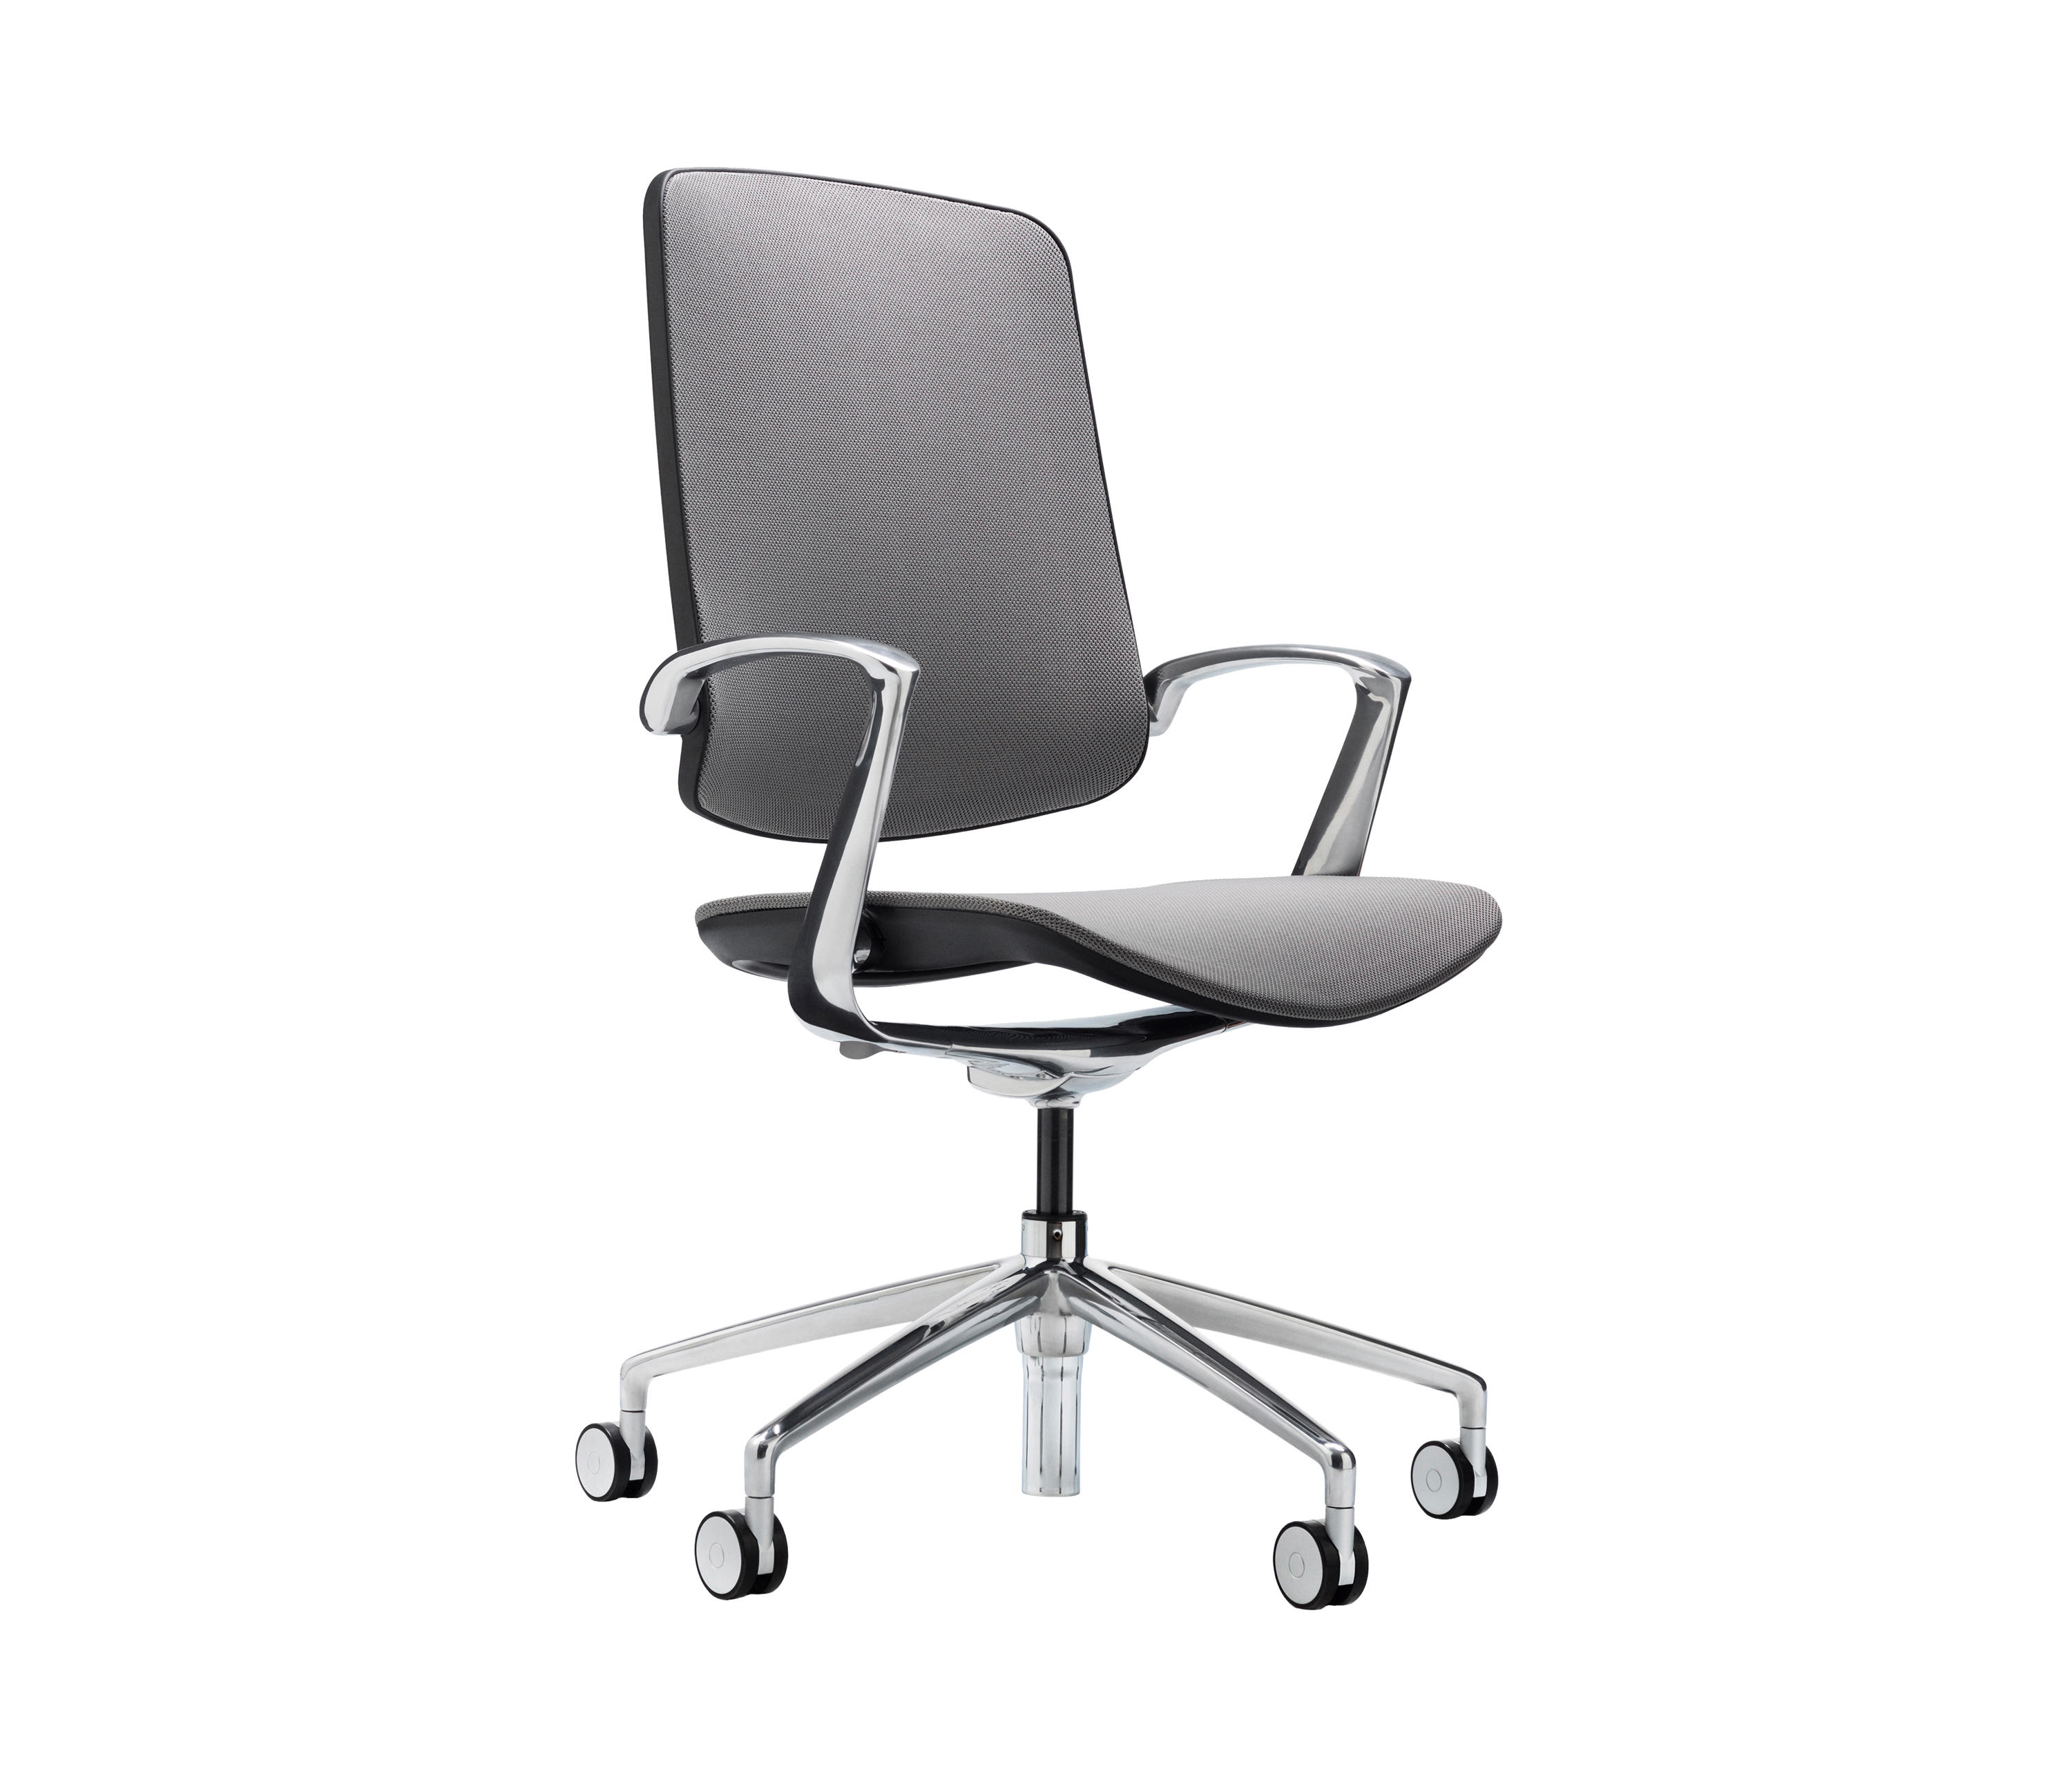 Boss design chairs